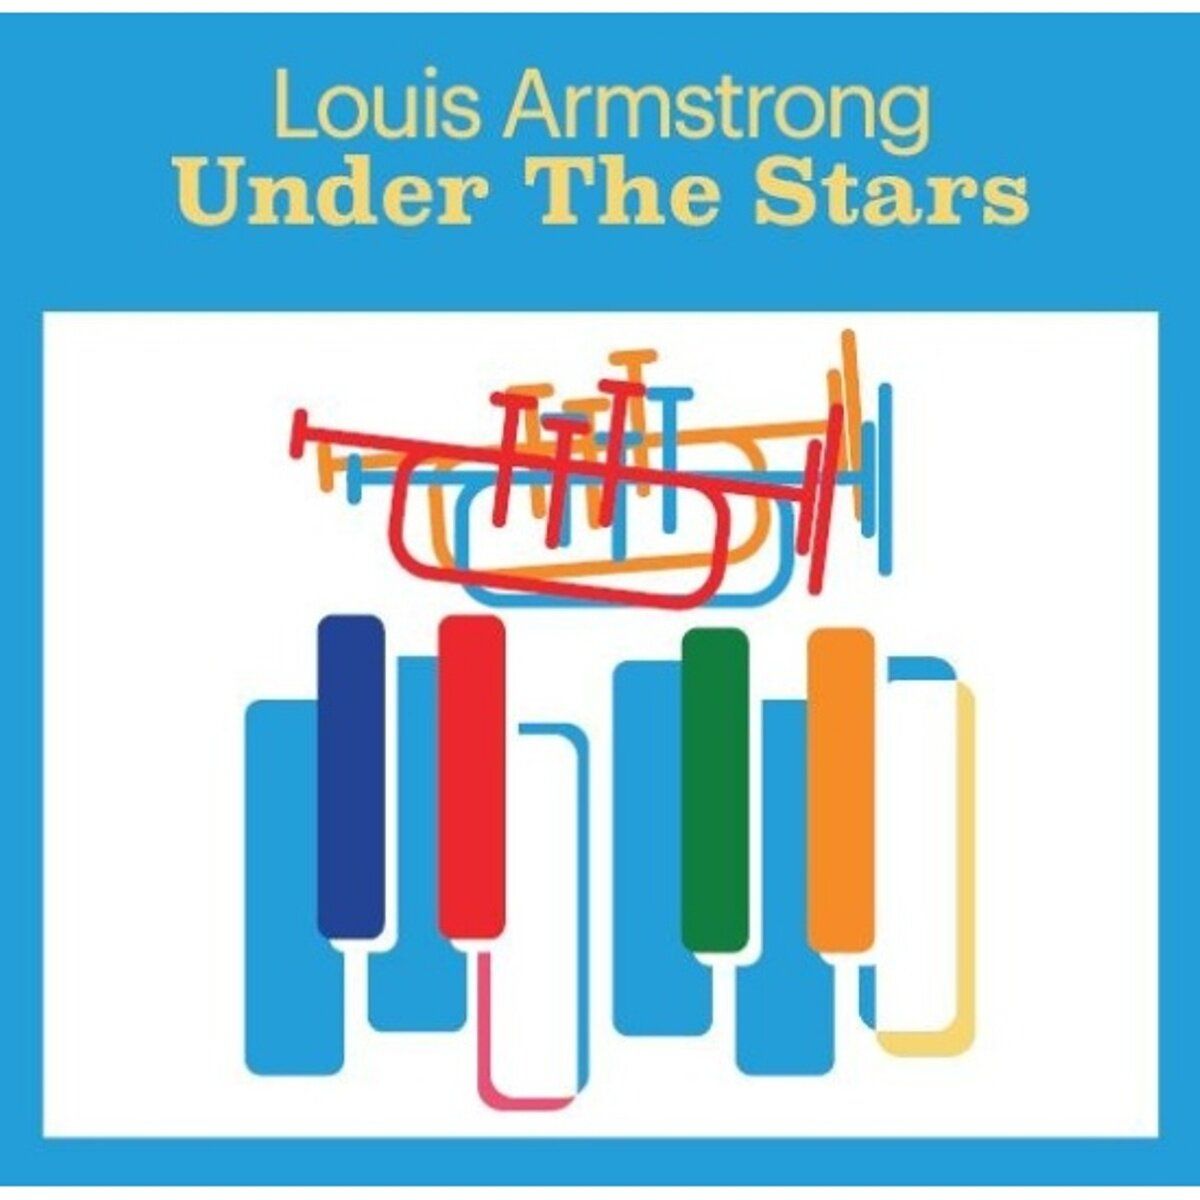 4601620108754 виниловая пластинка armstrong louis under the stars 4601620108754, Виниловая пластинка Armstrong, Louis, Under The Stars